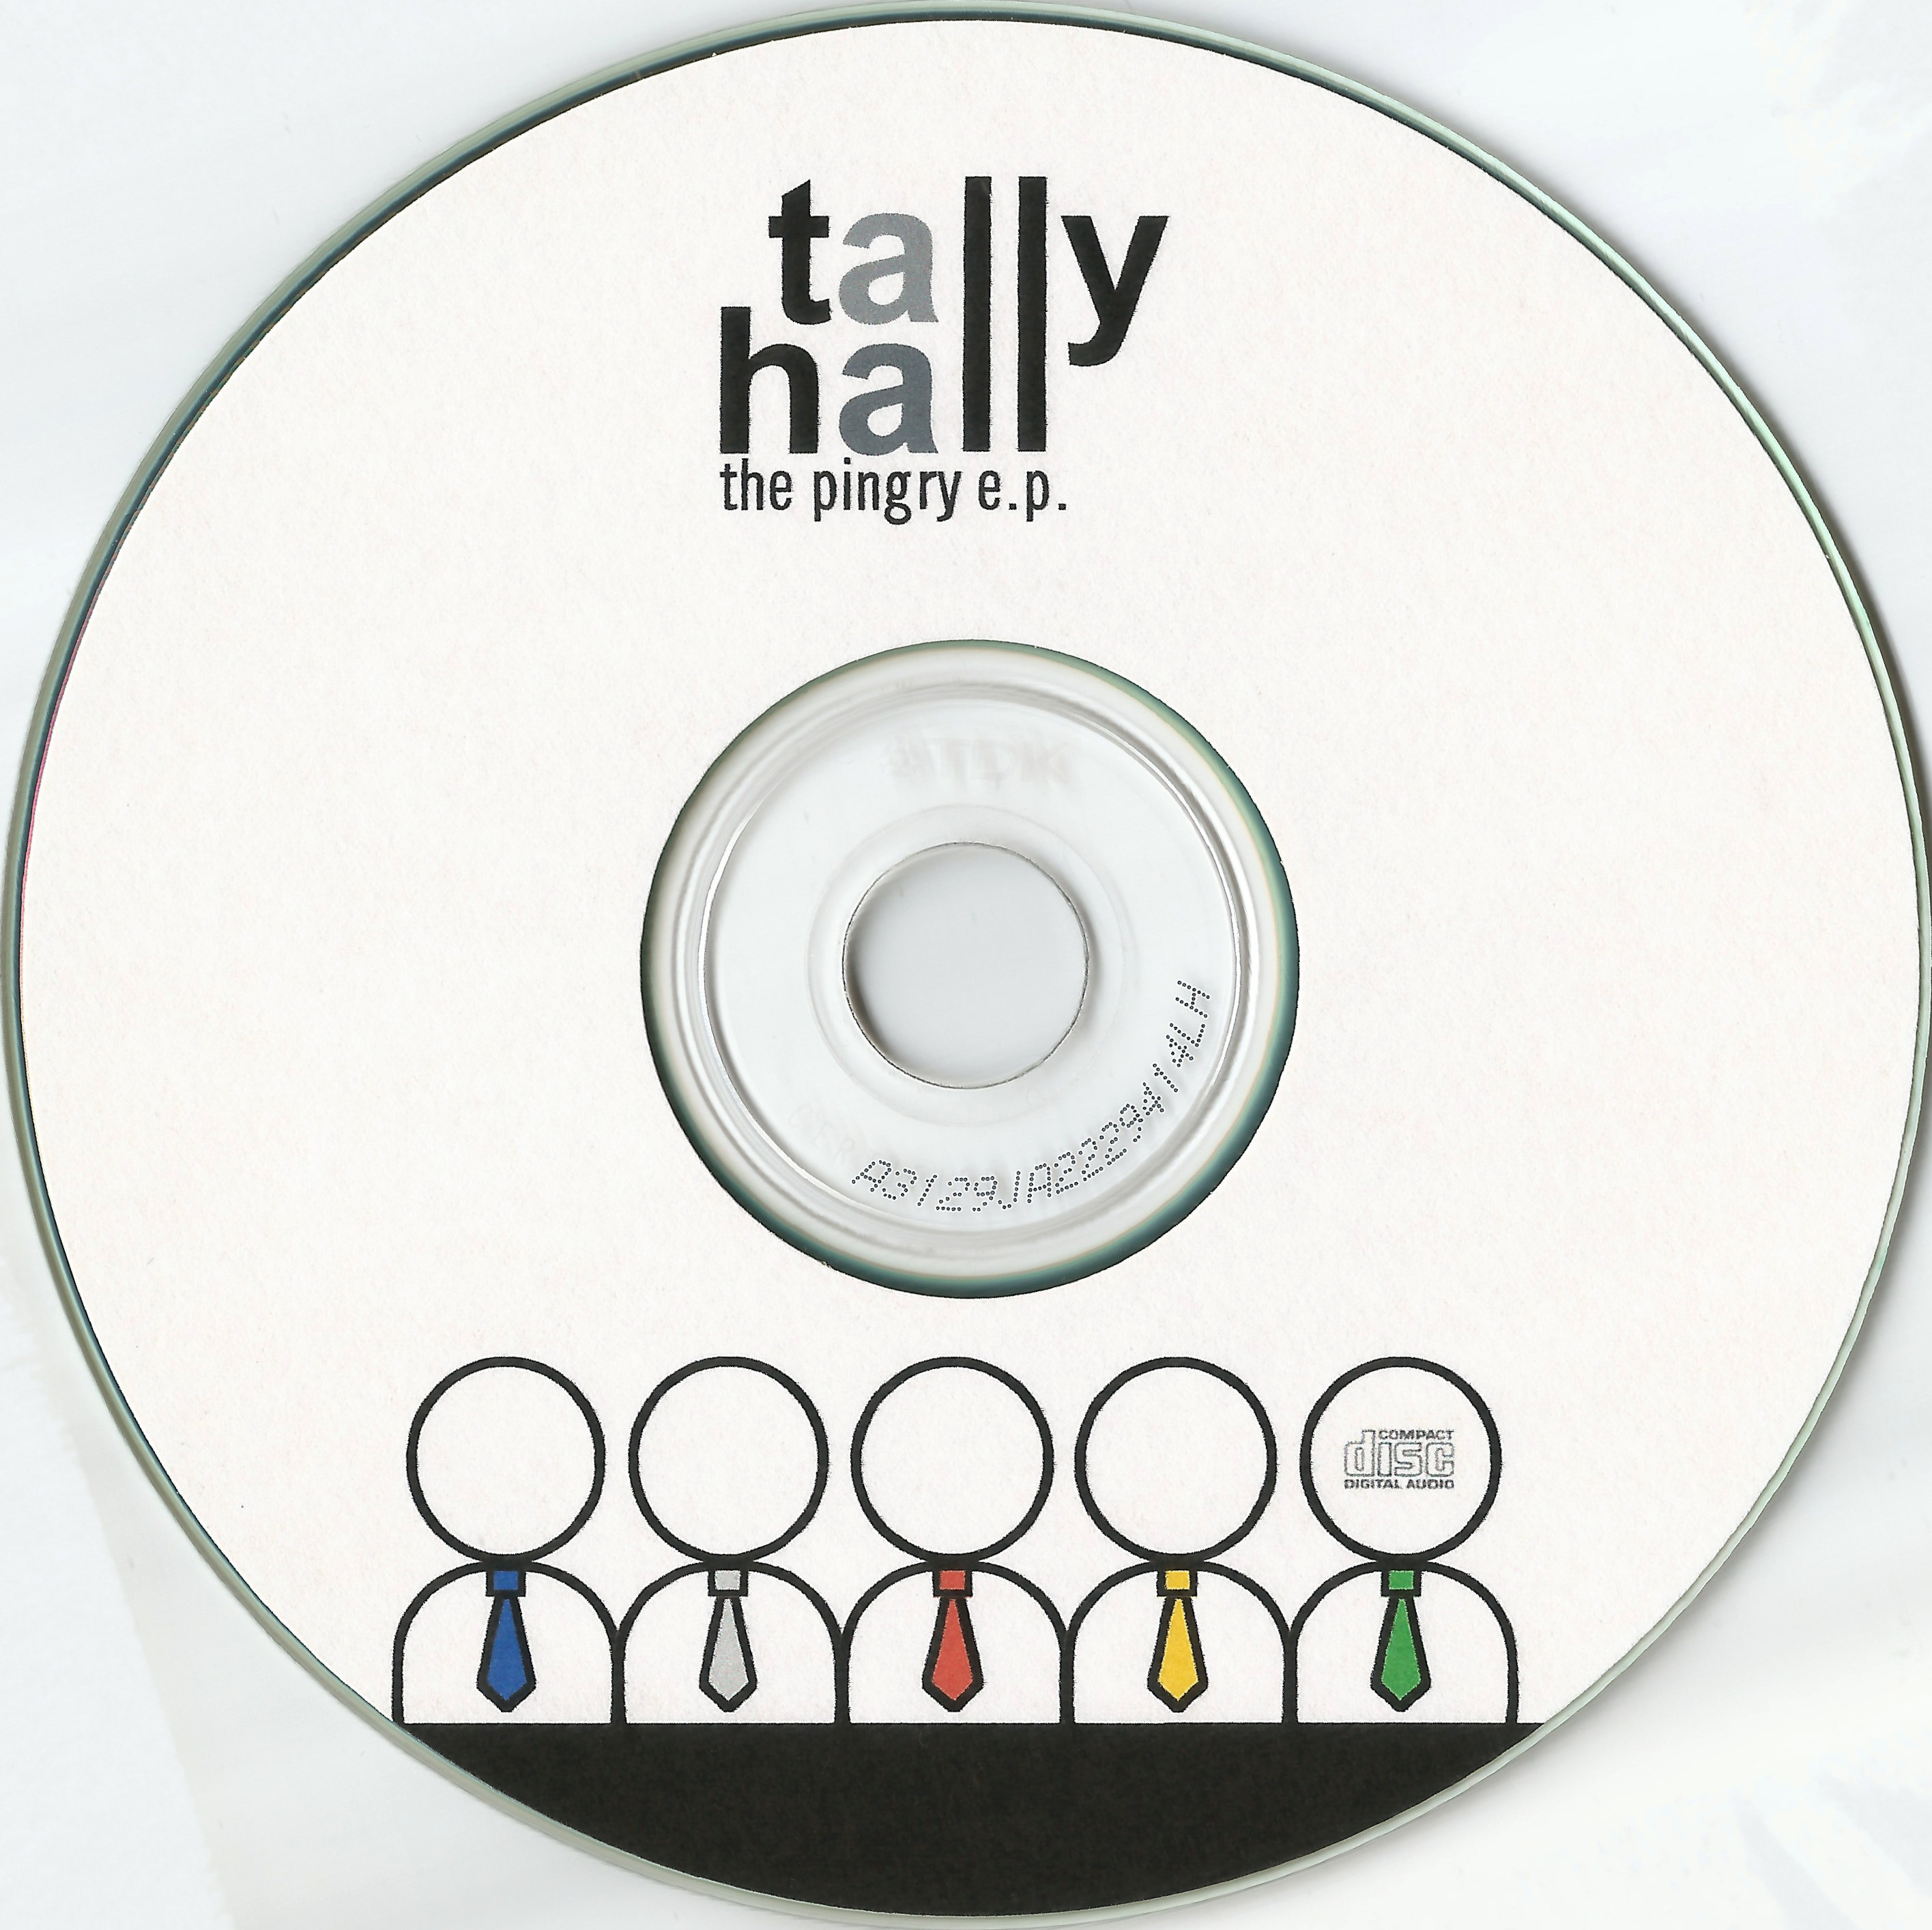 Tally hall текст. Tally Hall Band. Tally Hall обложка. The bidding Tally Hall. Tally Hall логотип.